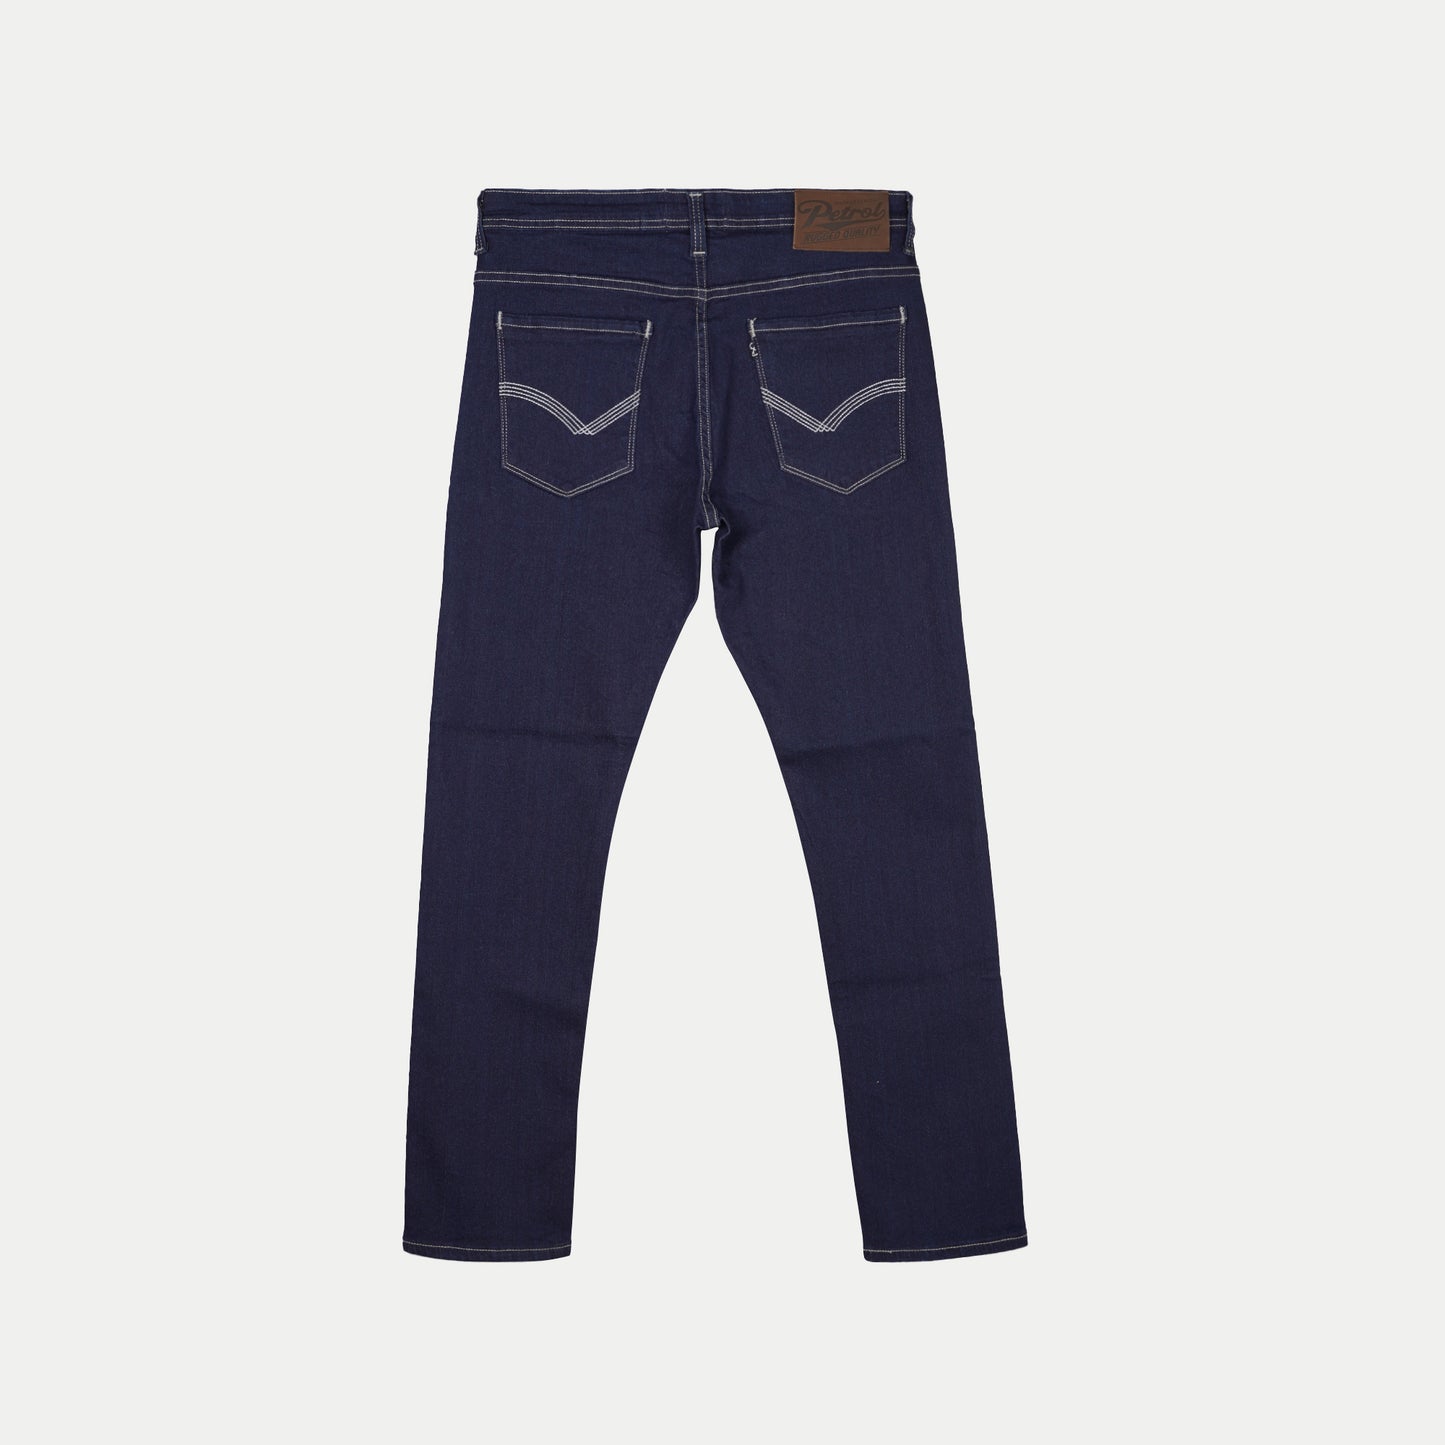 Petrol Basic Denim Pants for Men Skin Tight Fitting Mid Rise Trendy fashion Casual Bottoms Dark Shade Jeans for Men 150706 (Dark Shade)